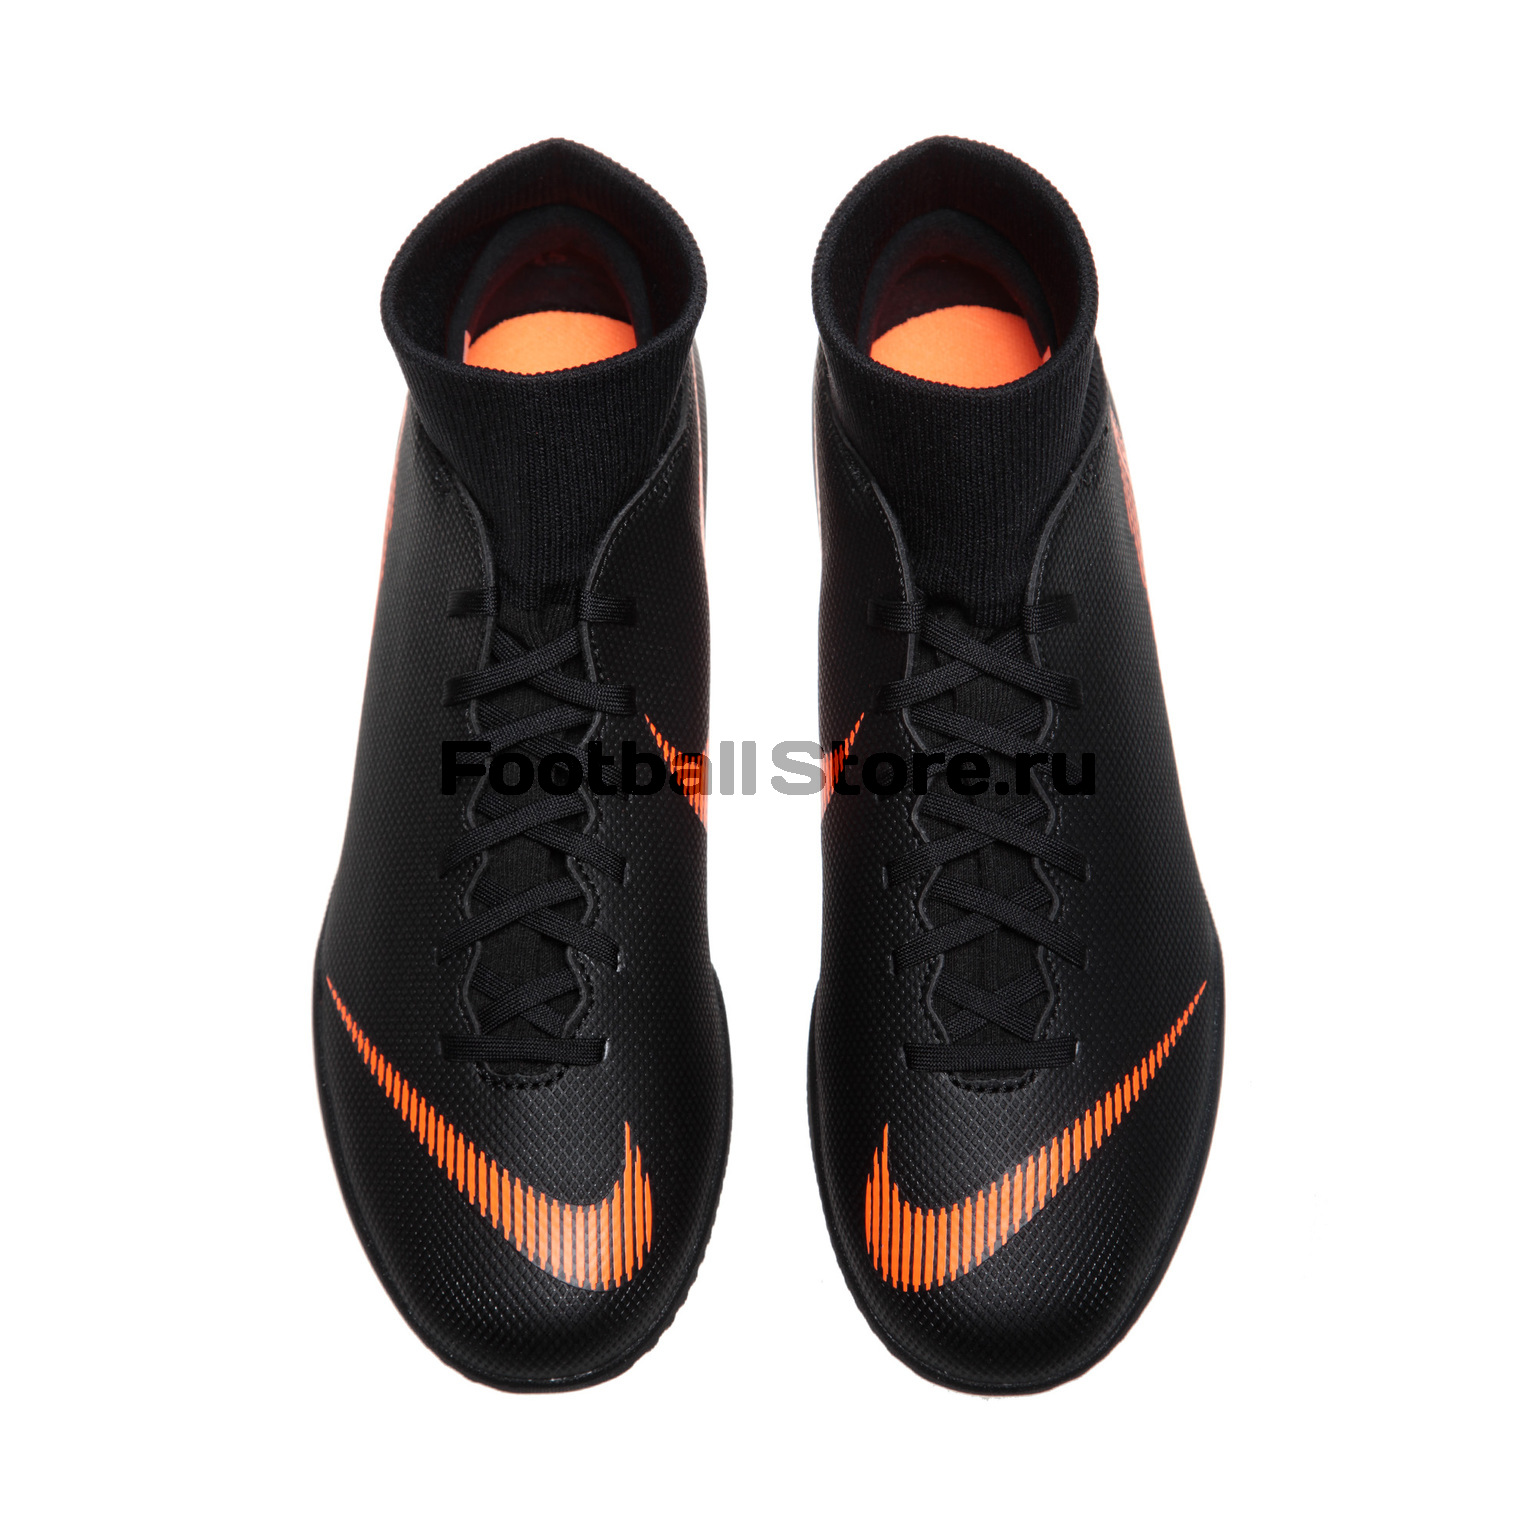 Обувь для зала Nike SuperflyX 6 Club IC AH7371-081